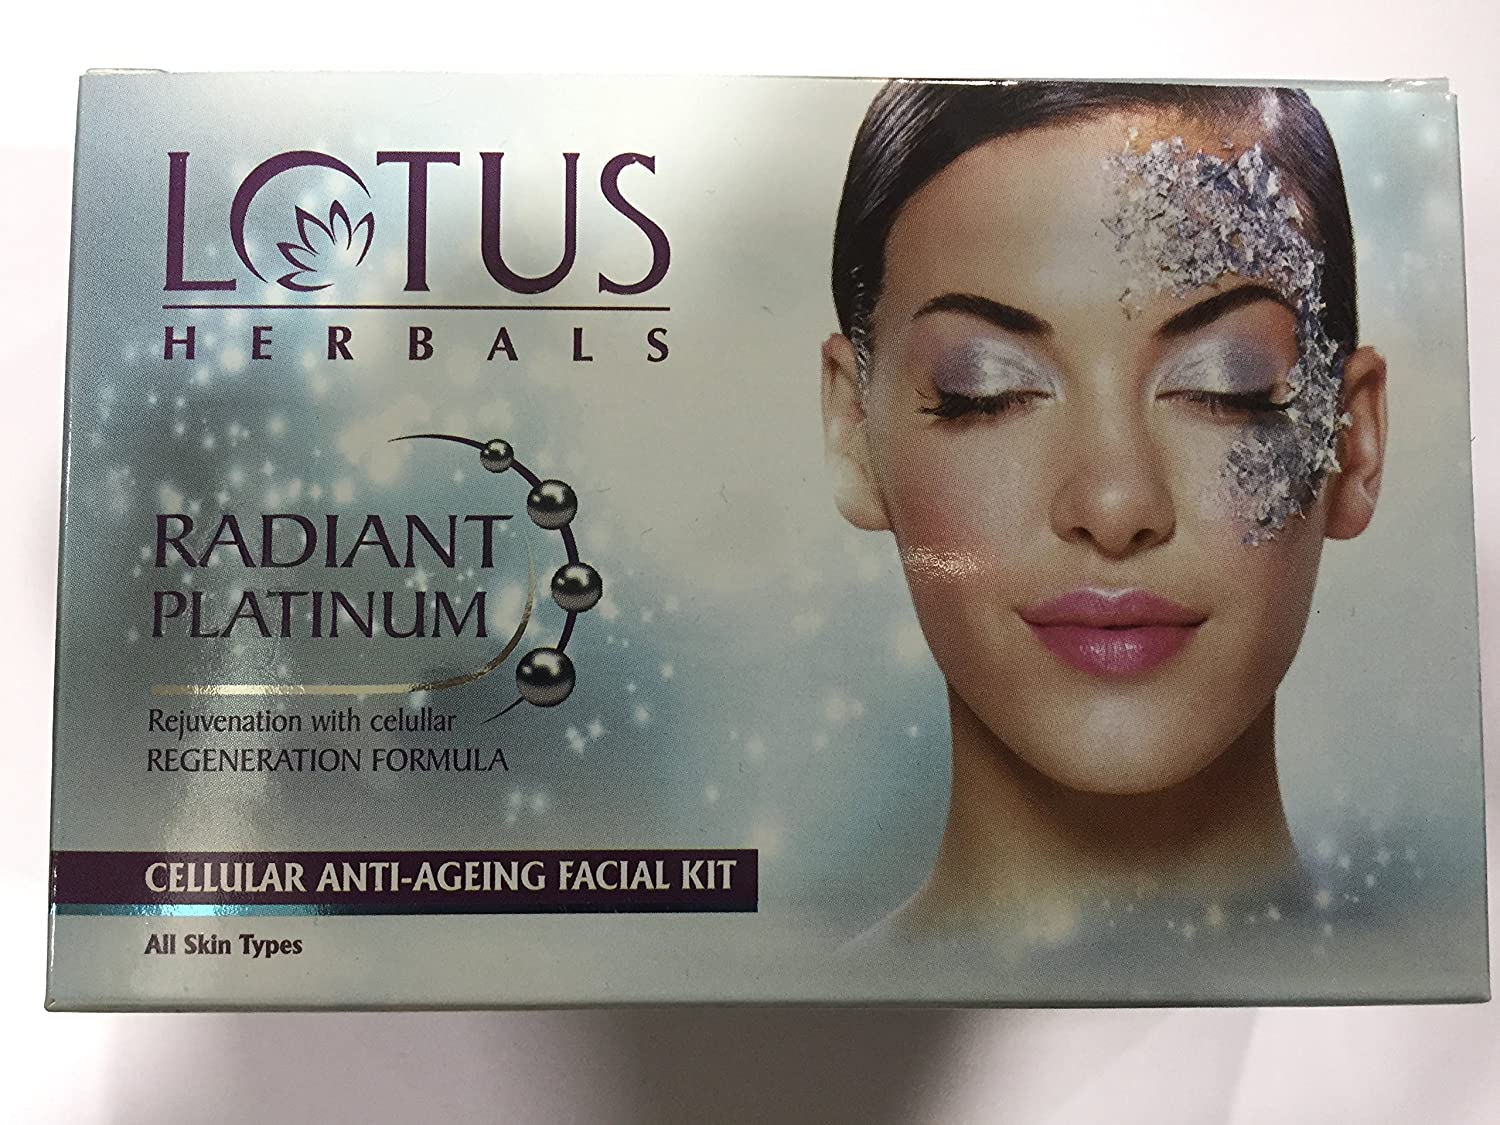 Lotus Herbals Radiant Platinum Facial Kit, 37g - image 3 of 3